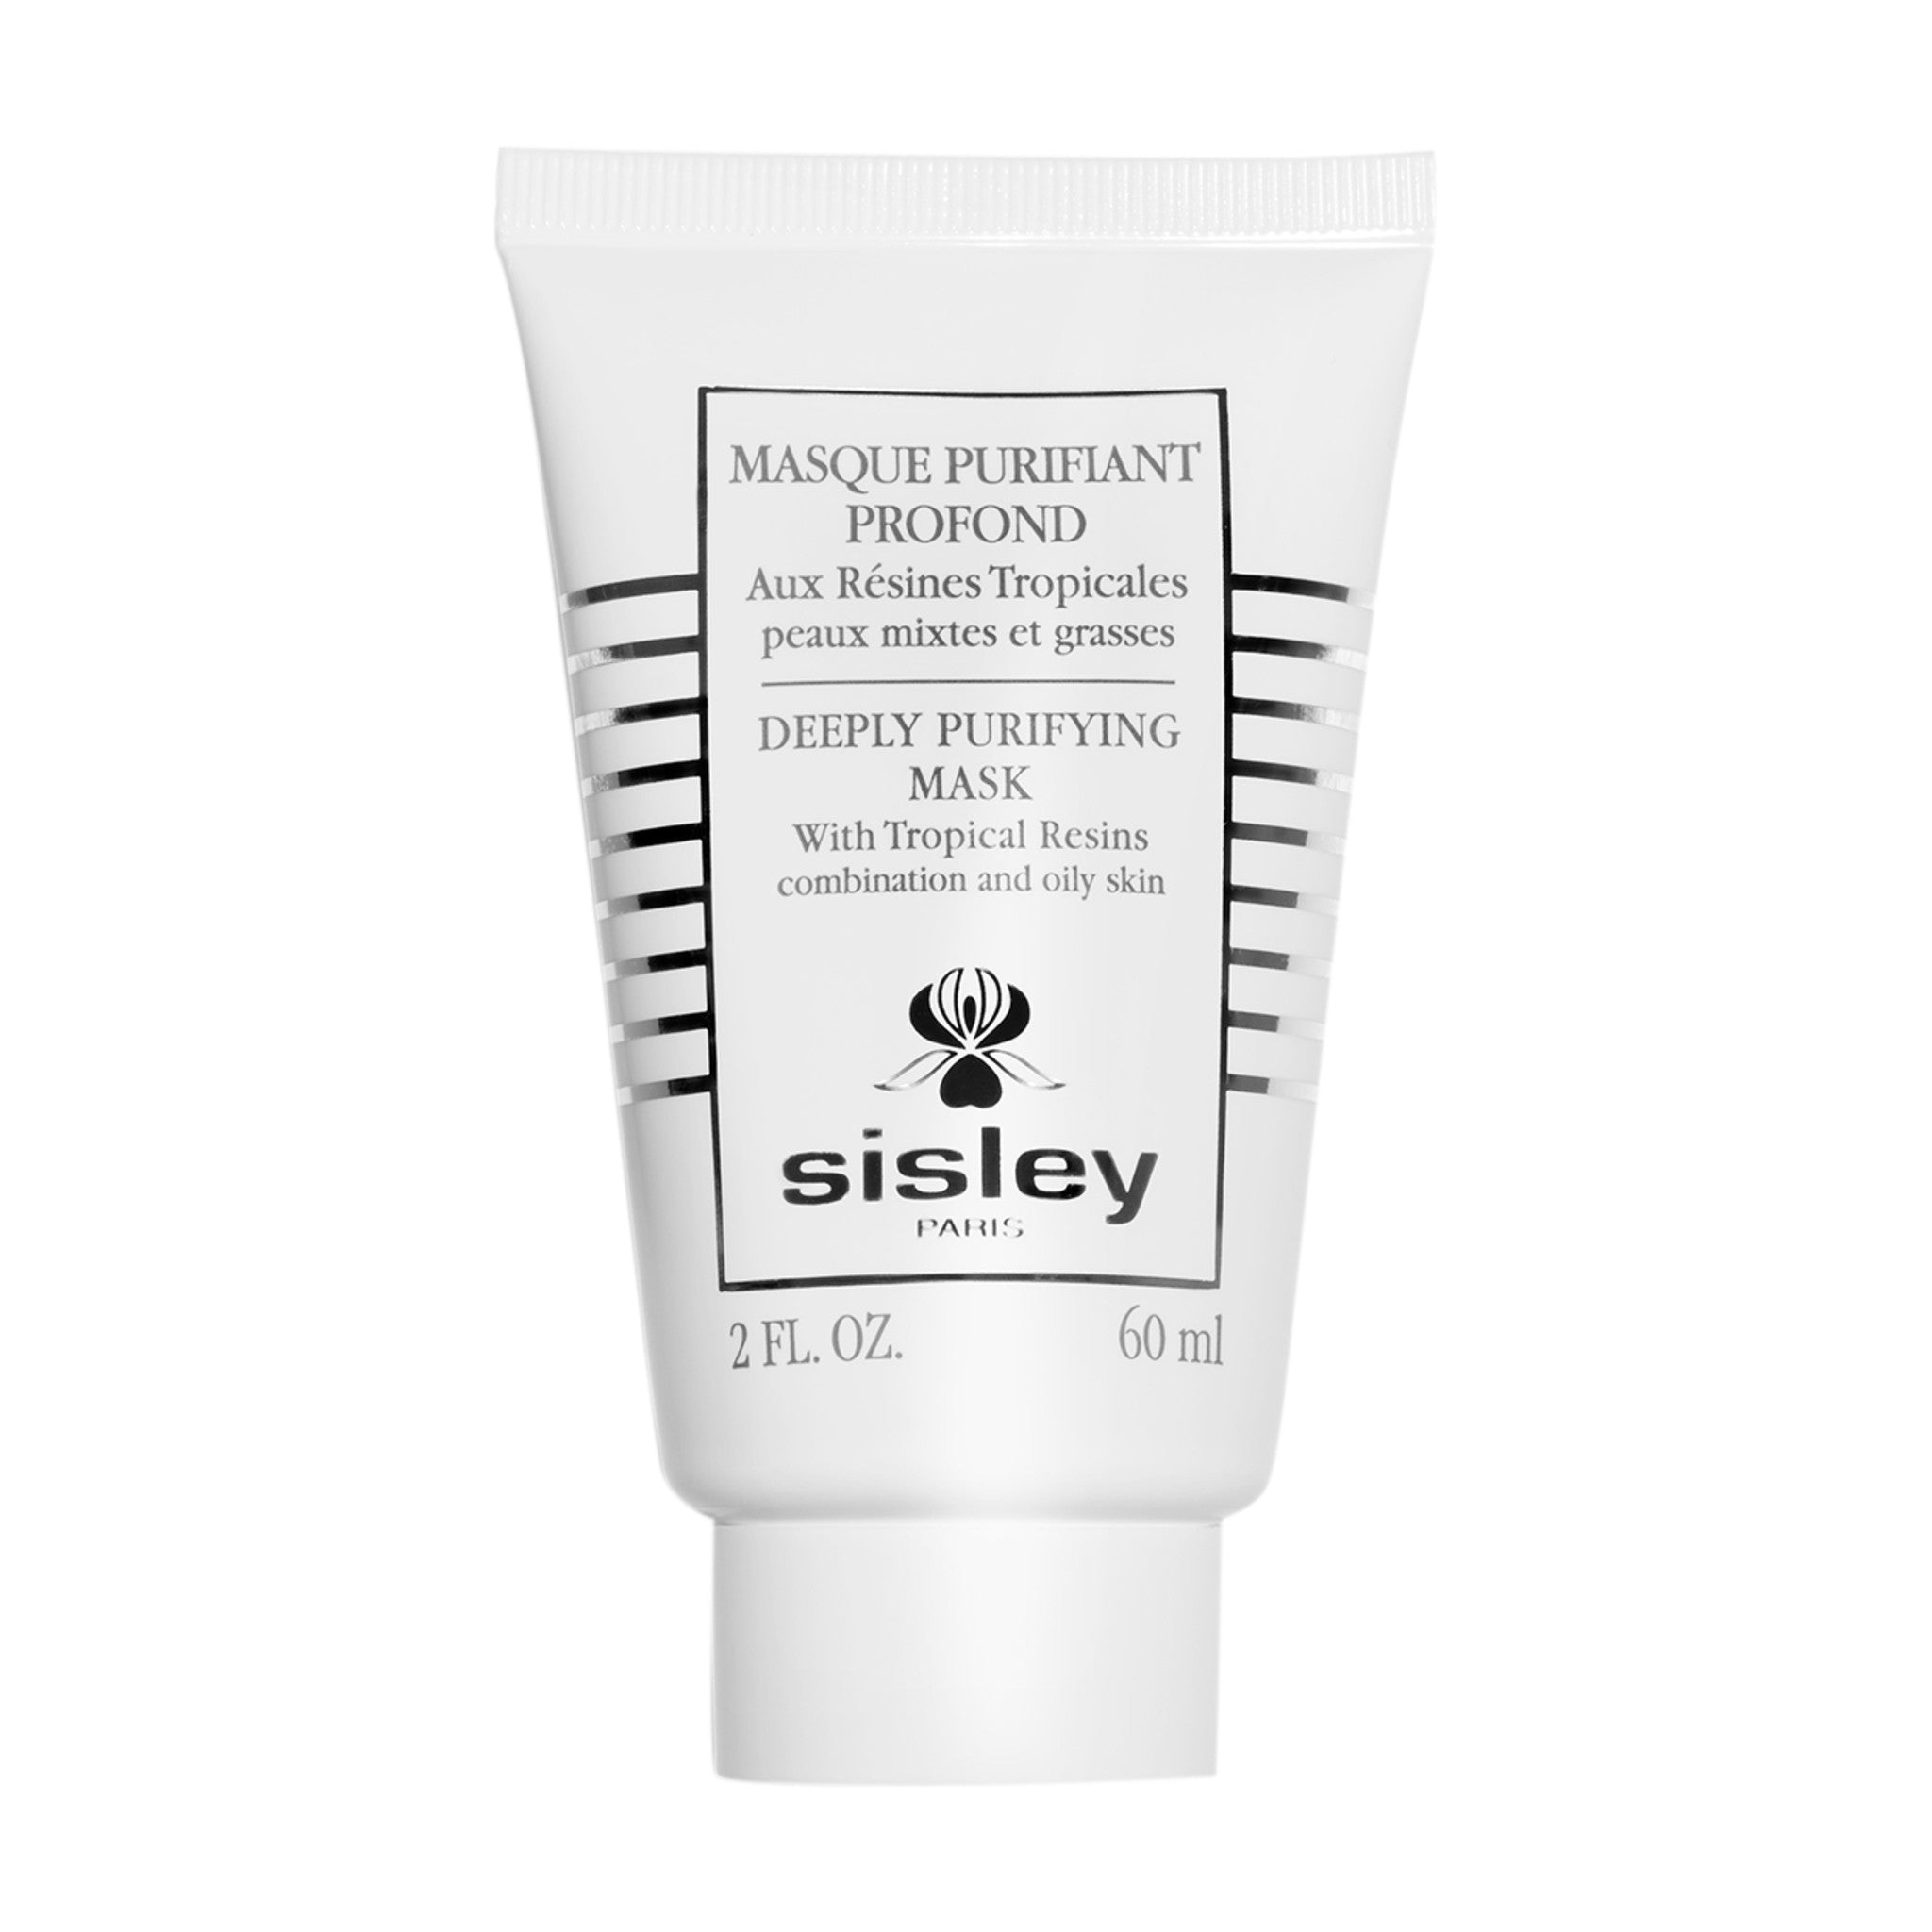 Sisley-Paris Deeply Purifying Mask With Tropical Resins main image.